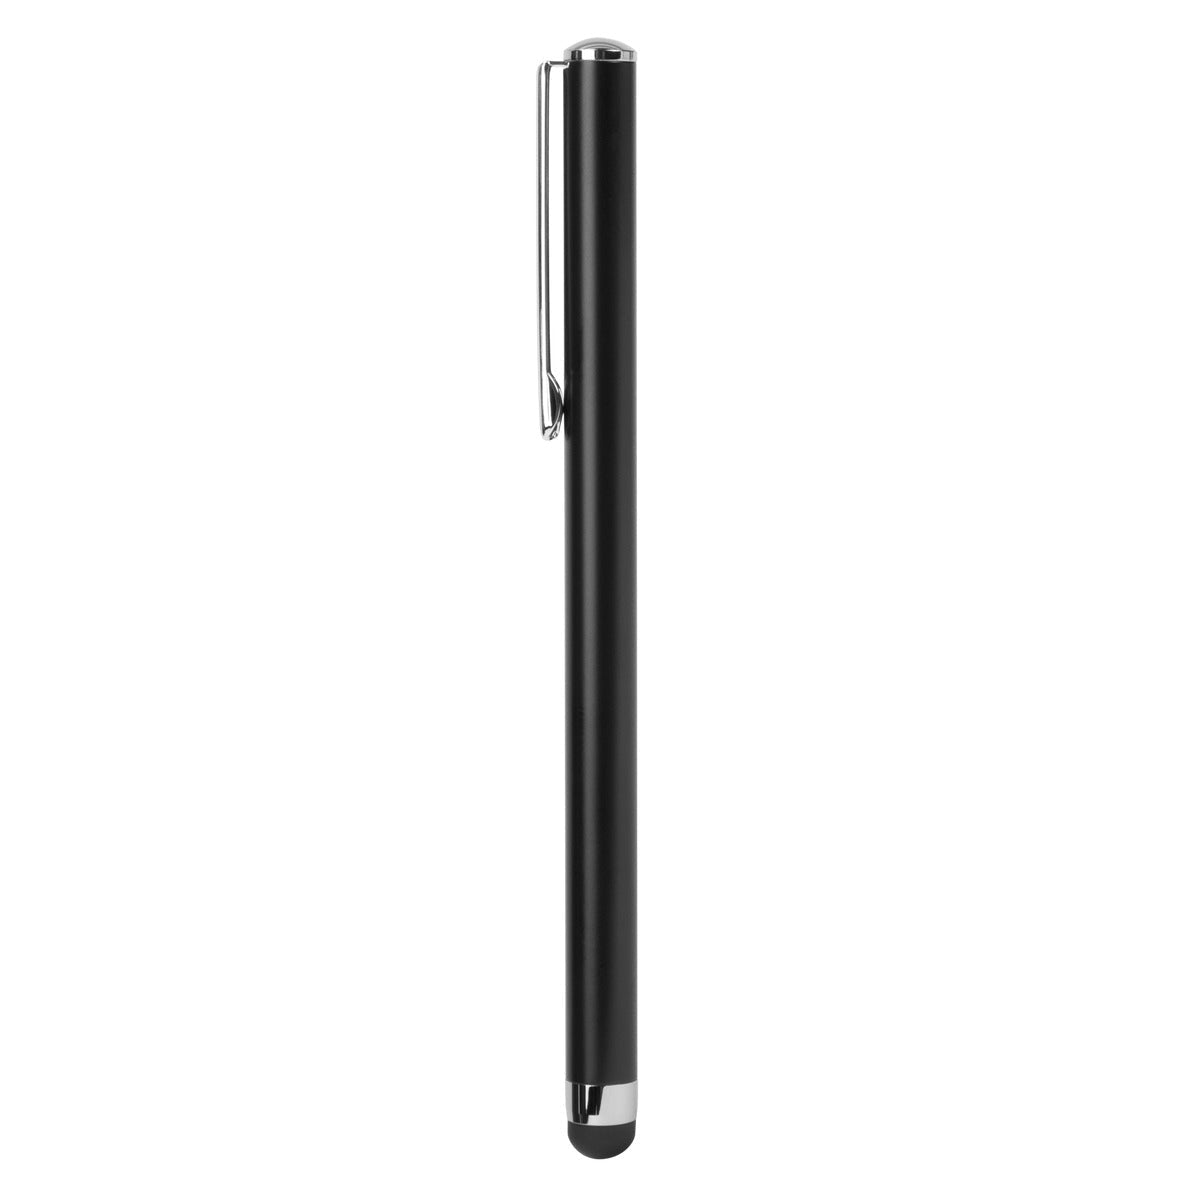 Targus AMM01AMGL stylus pen 20 g Black - AMM01AMGL